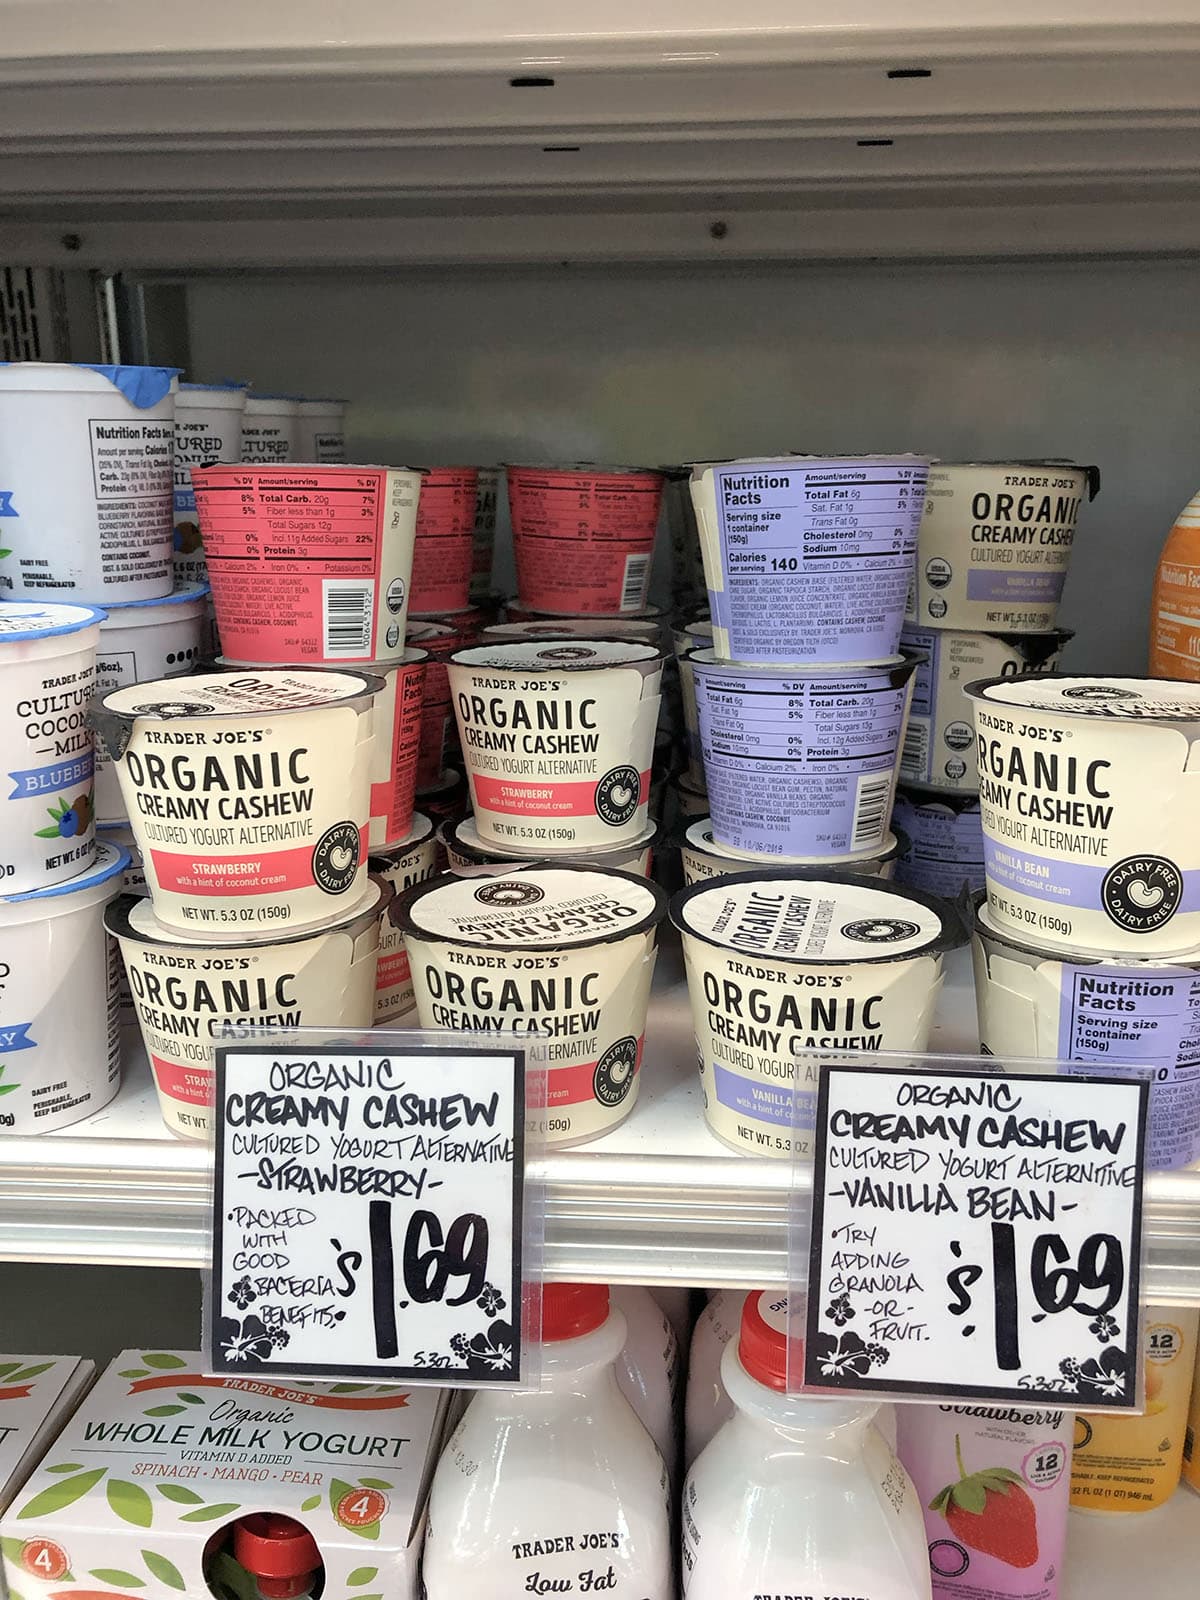 Organic cashew yogurt on the refrigerated shelf.